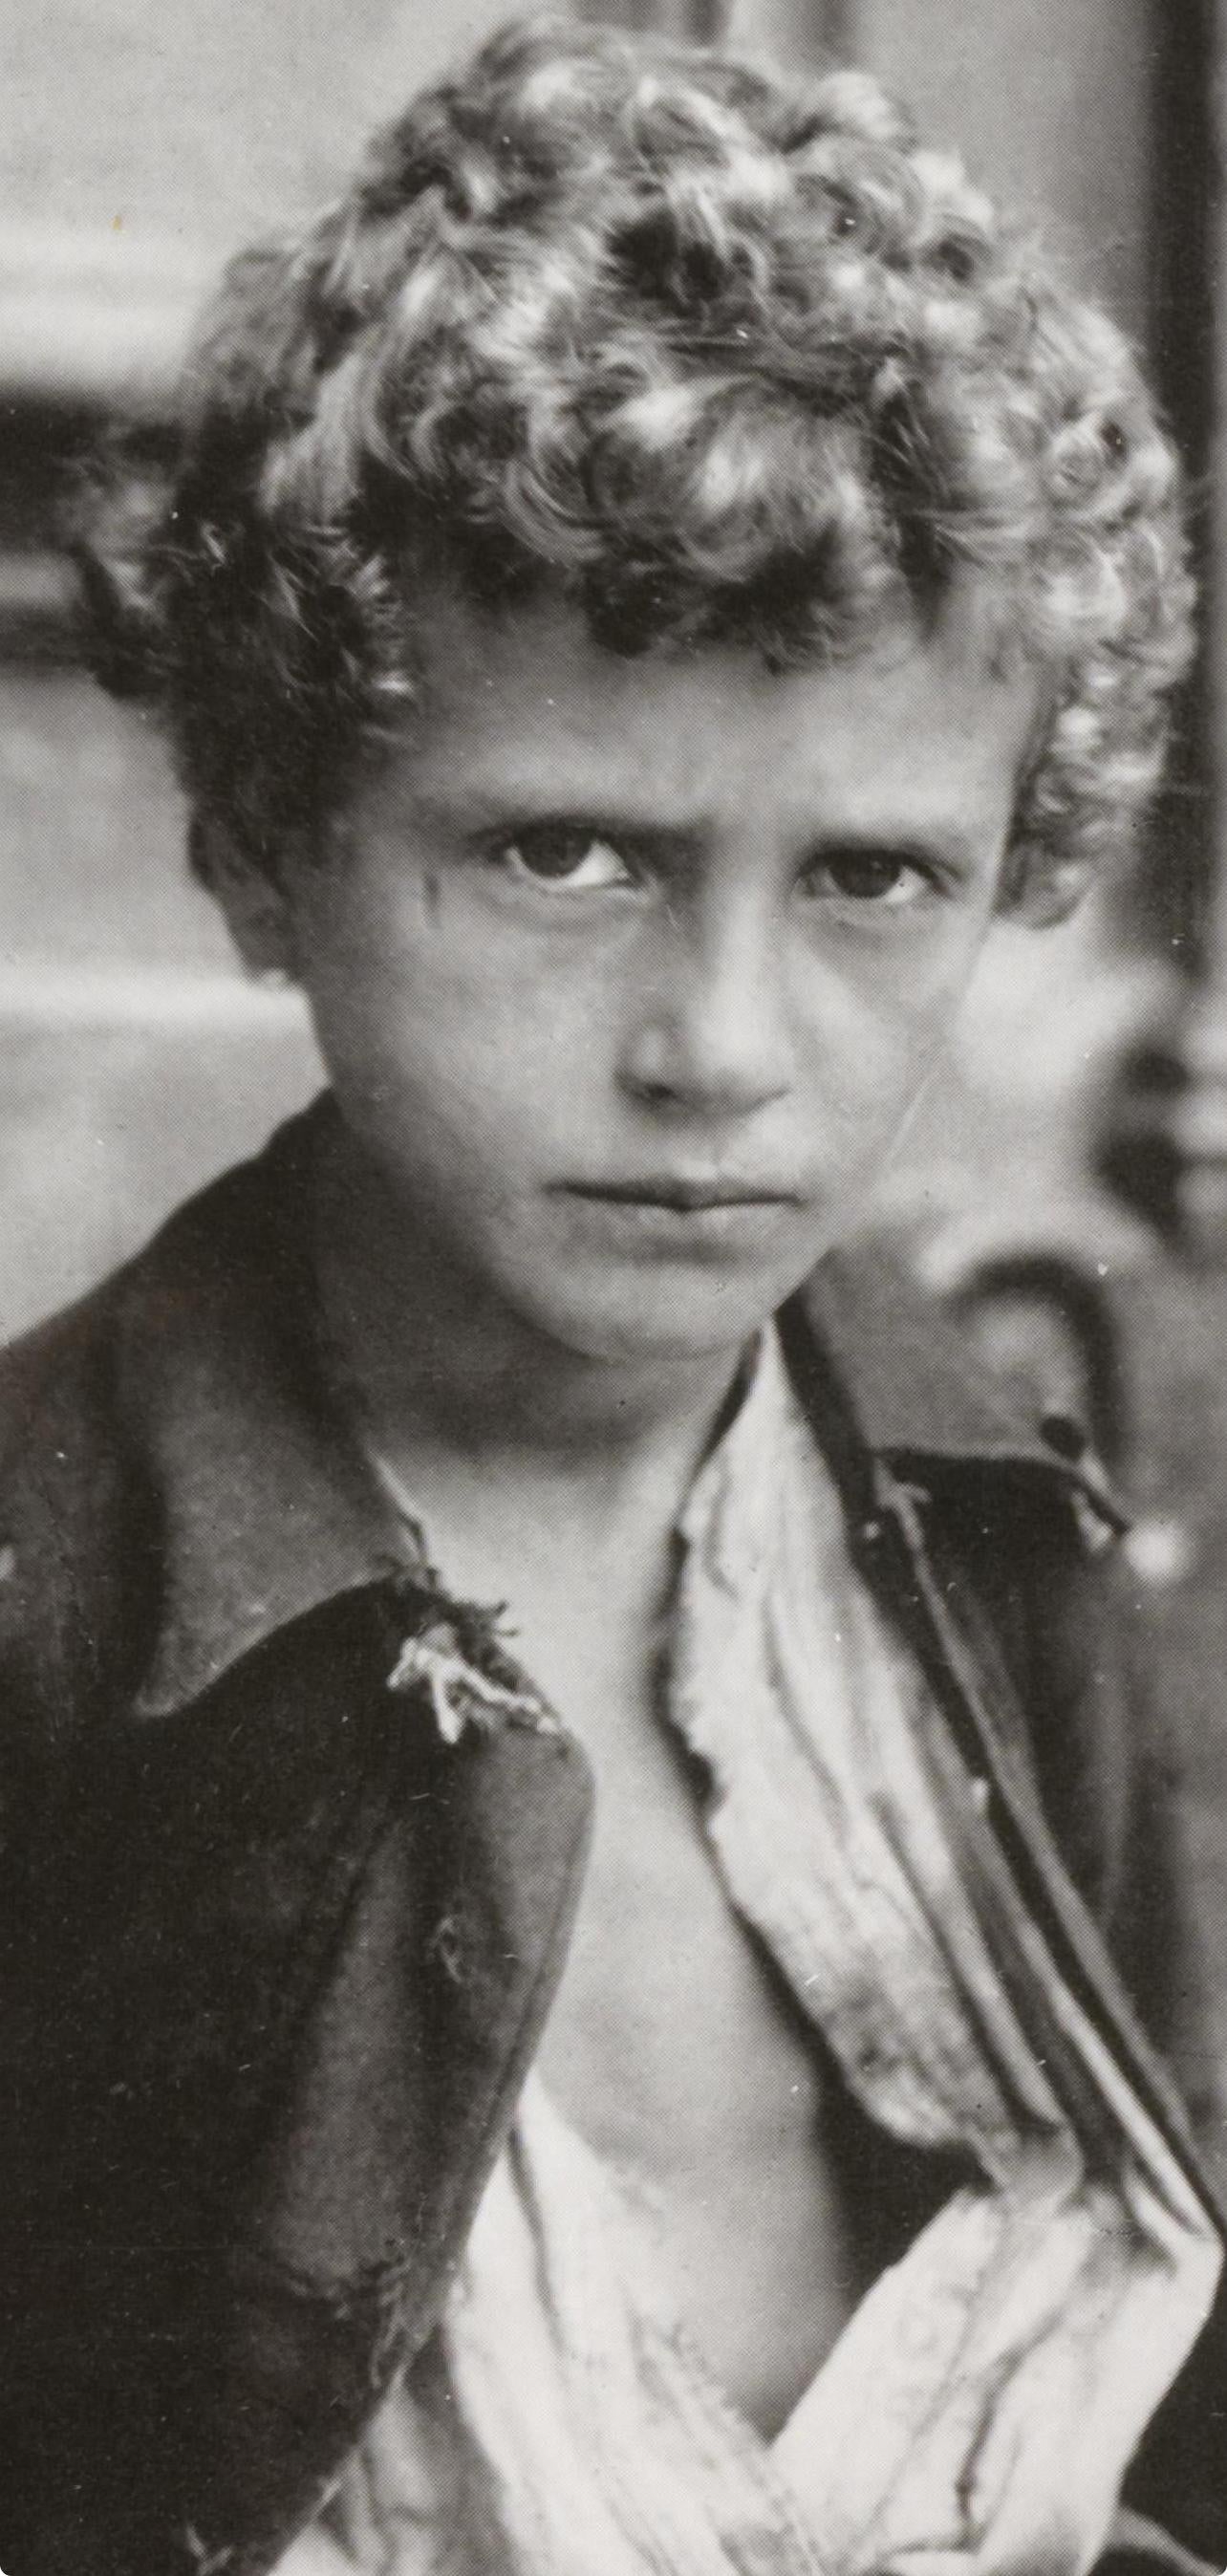 Stieglitz, Venetian Boy, Alfred Stieglitz Memorial Portfolio (after) For Sale 1